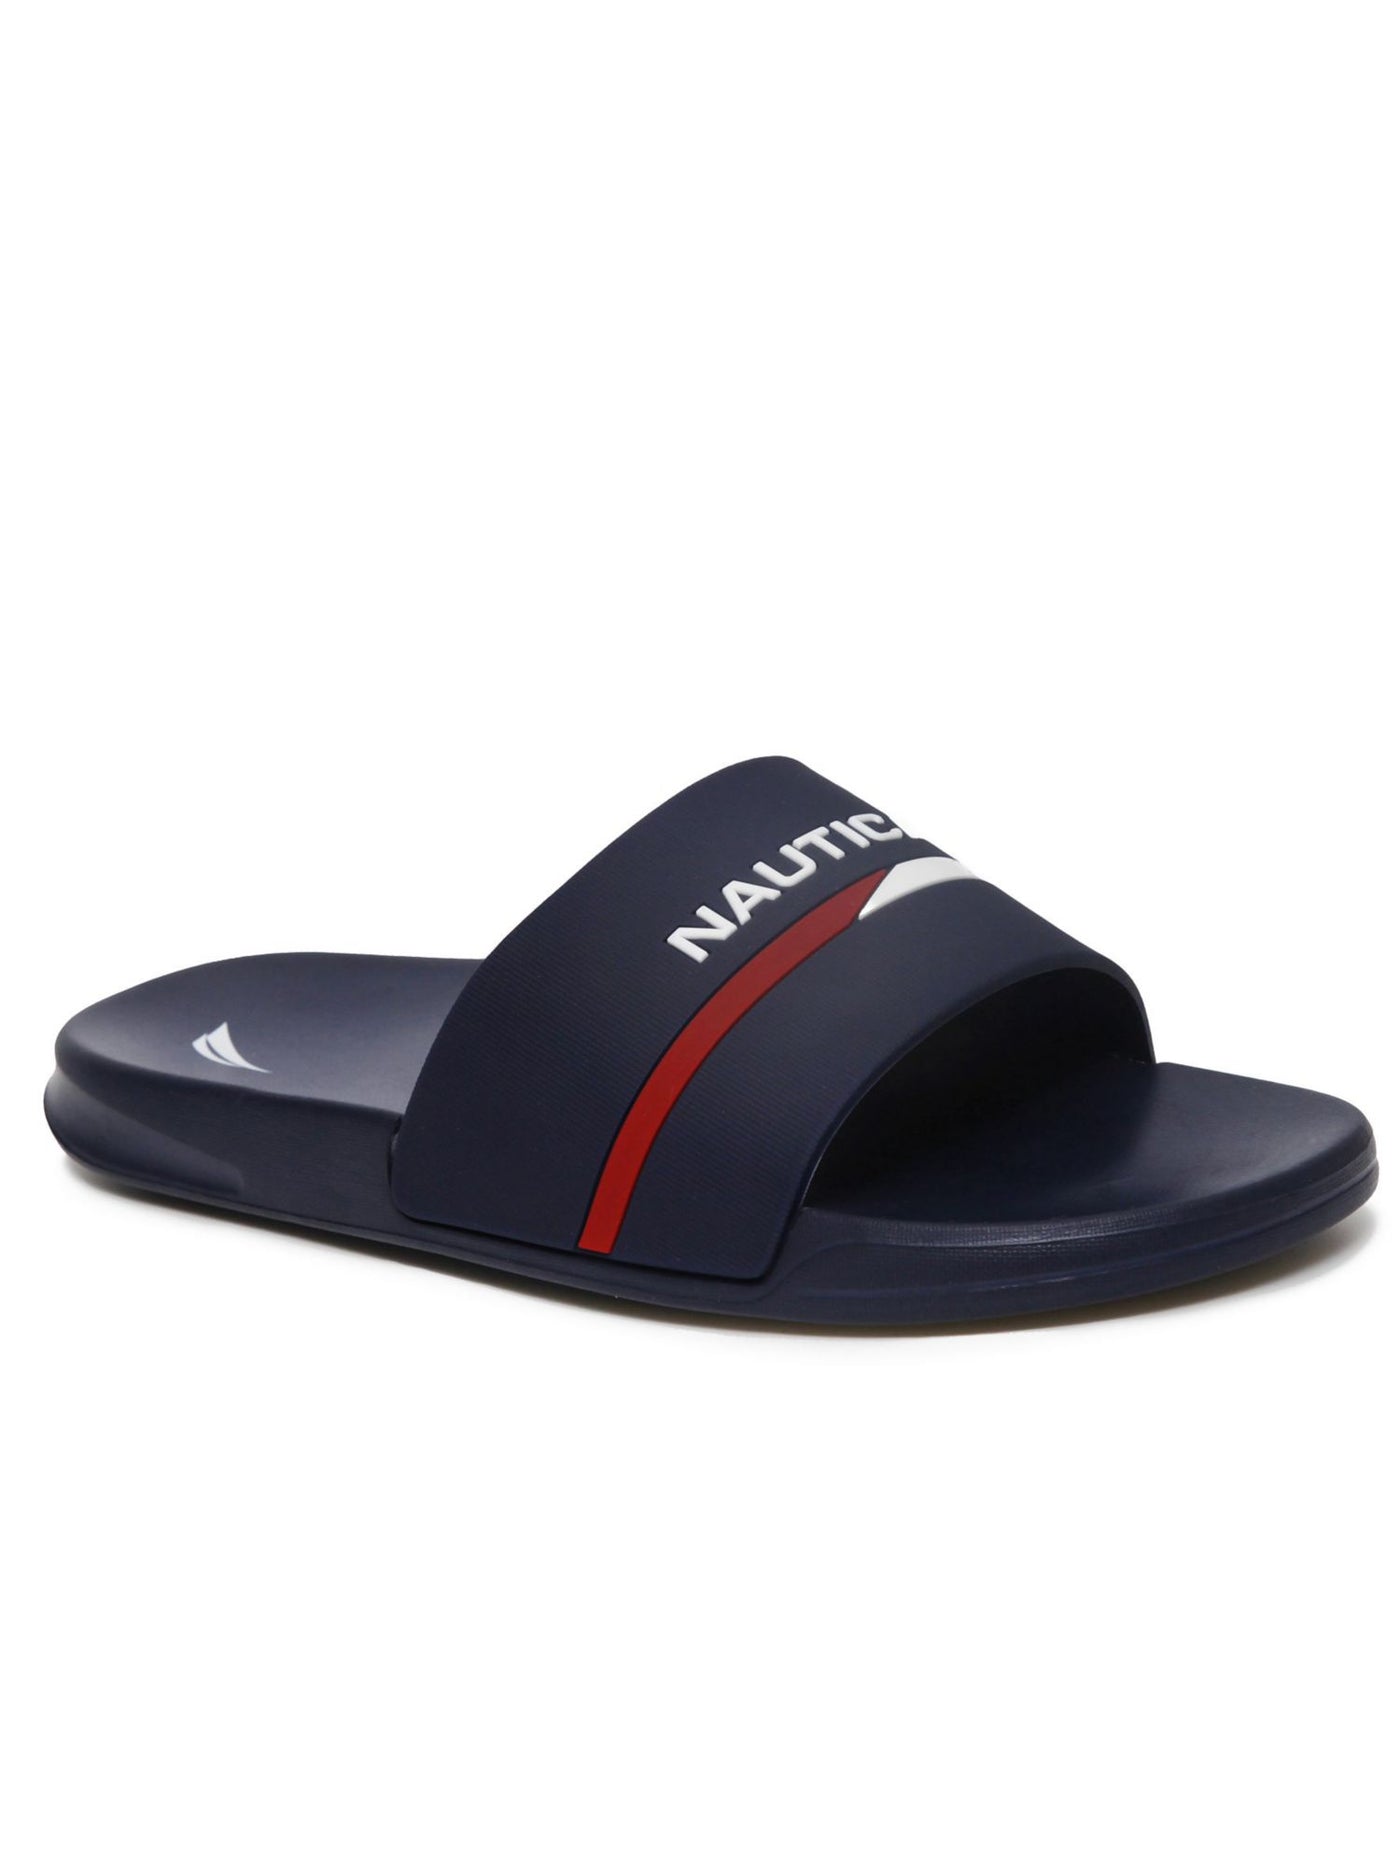 NAUTICA Mens Navy Padded Stono 2 Open Toe Slip On Slide Sandals Shoes 7 M